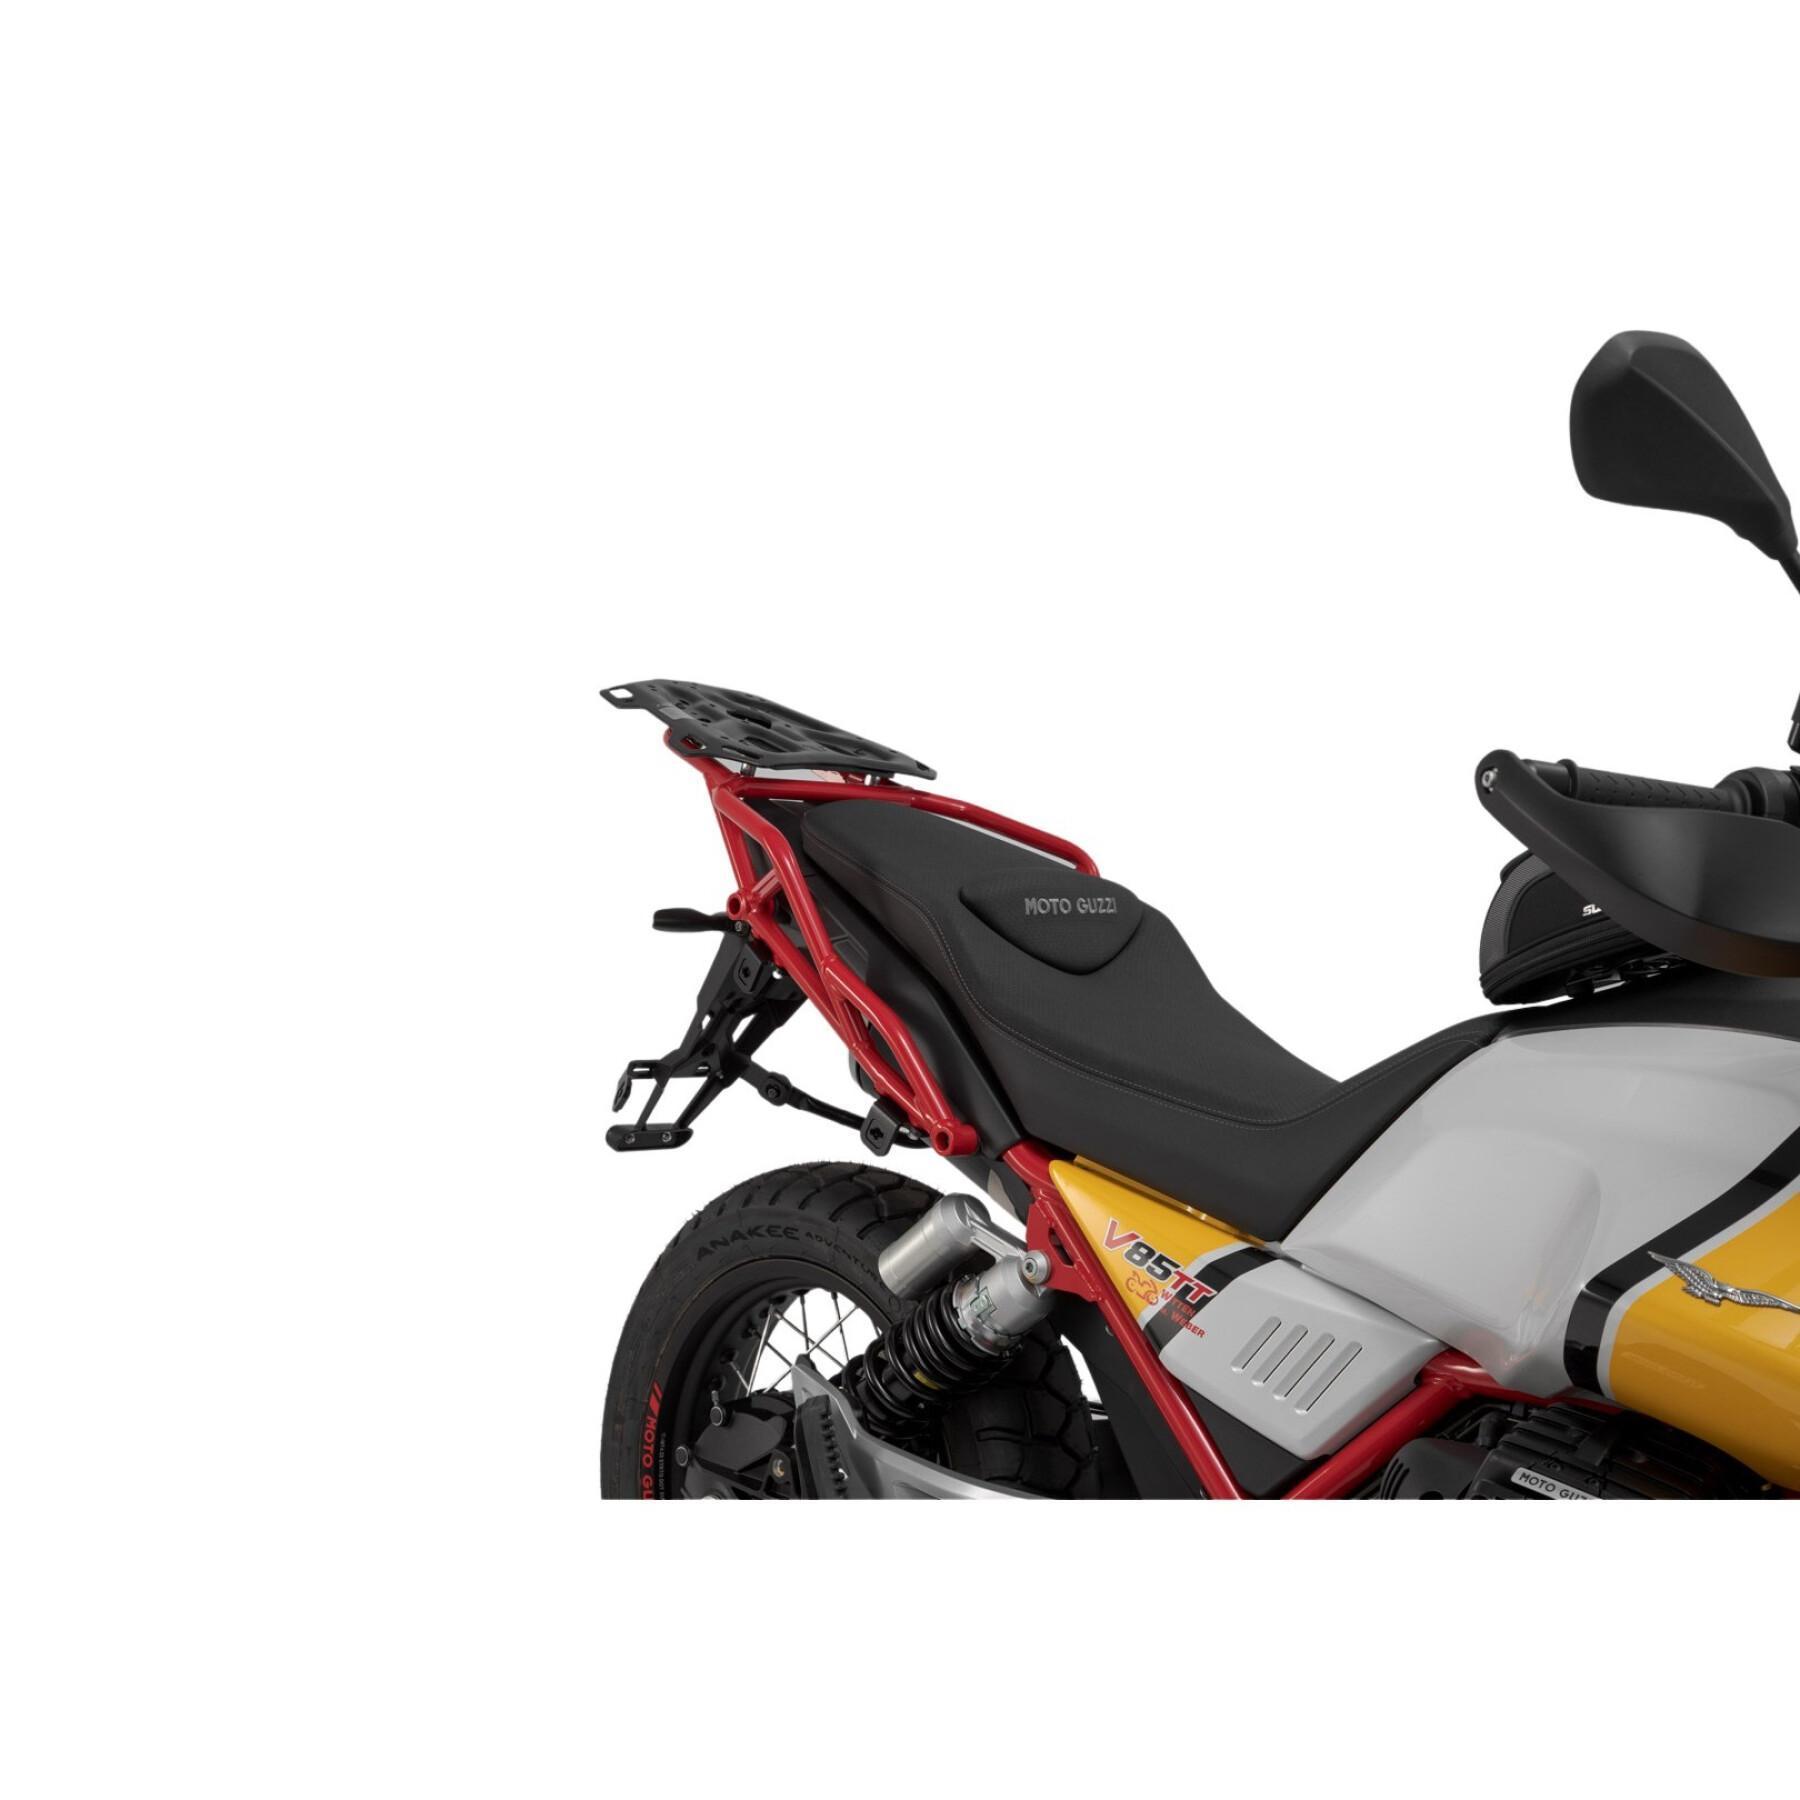 Suporte de mala lateral de motocicleta Sw-Motech Pro. Moto Guzzi V85 Tt (19-)